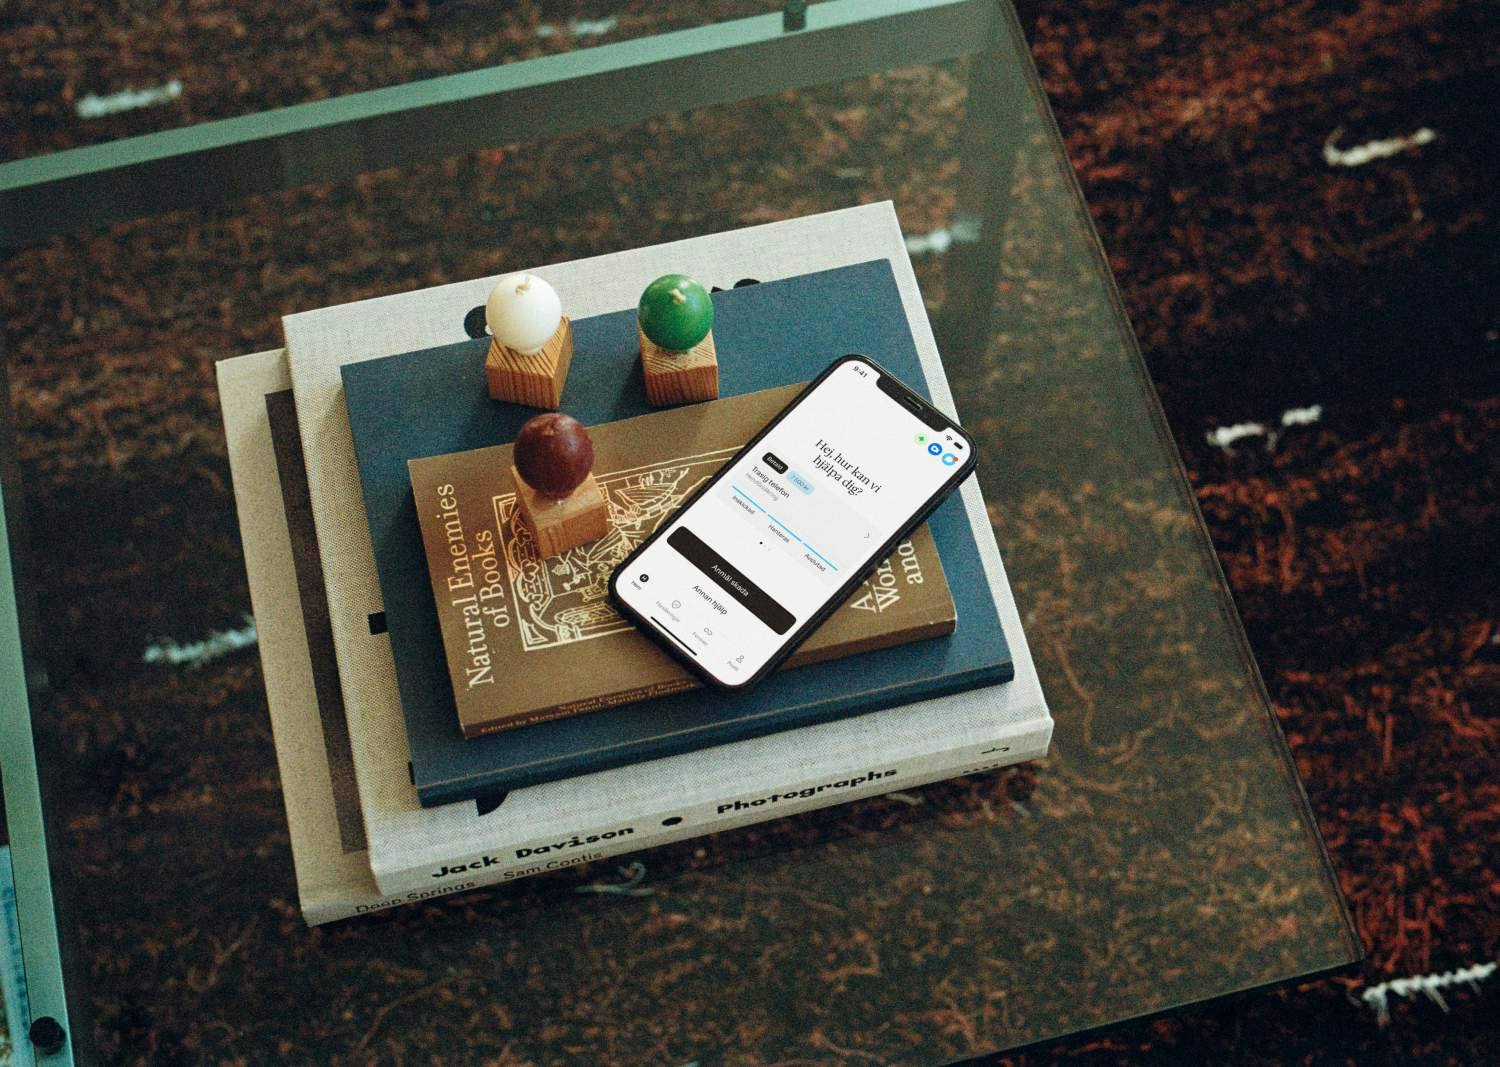 Mobiltelefon ligger på böcker på ett glasbord.